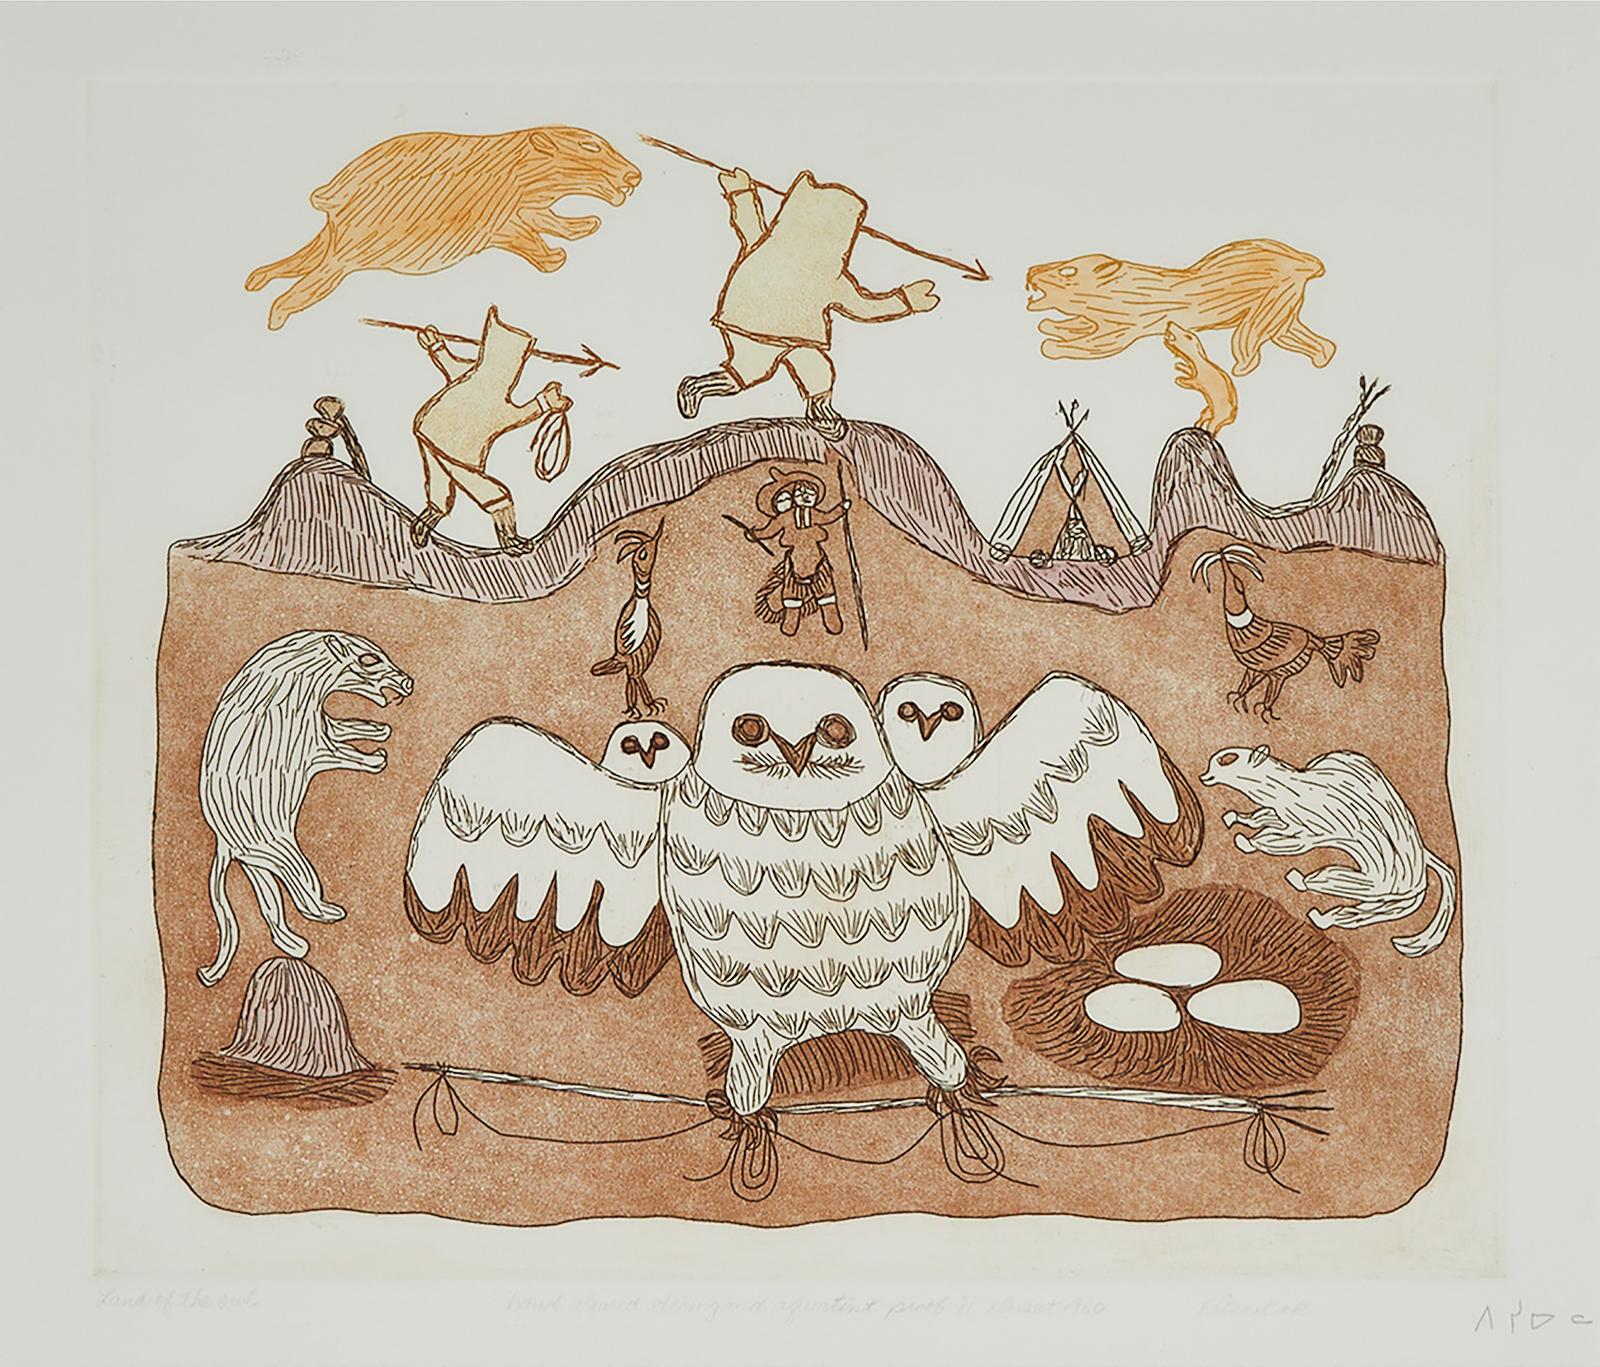 Pitseolak Ashoona (1904-1983) - Land Of The Owl